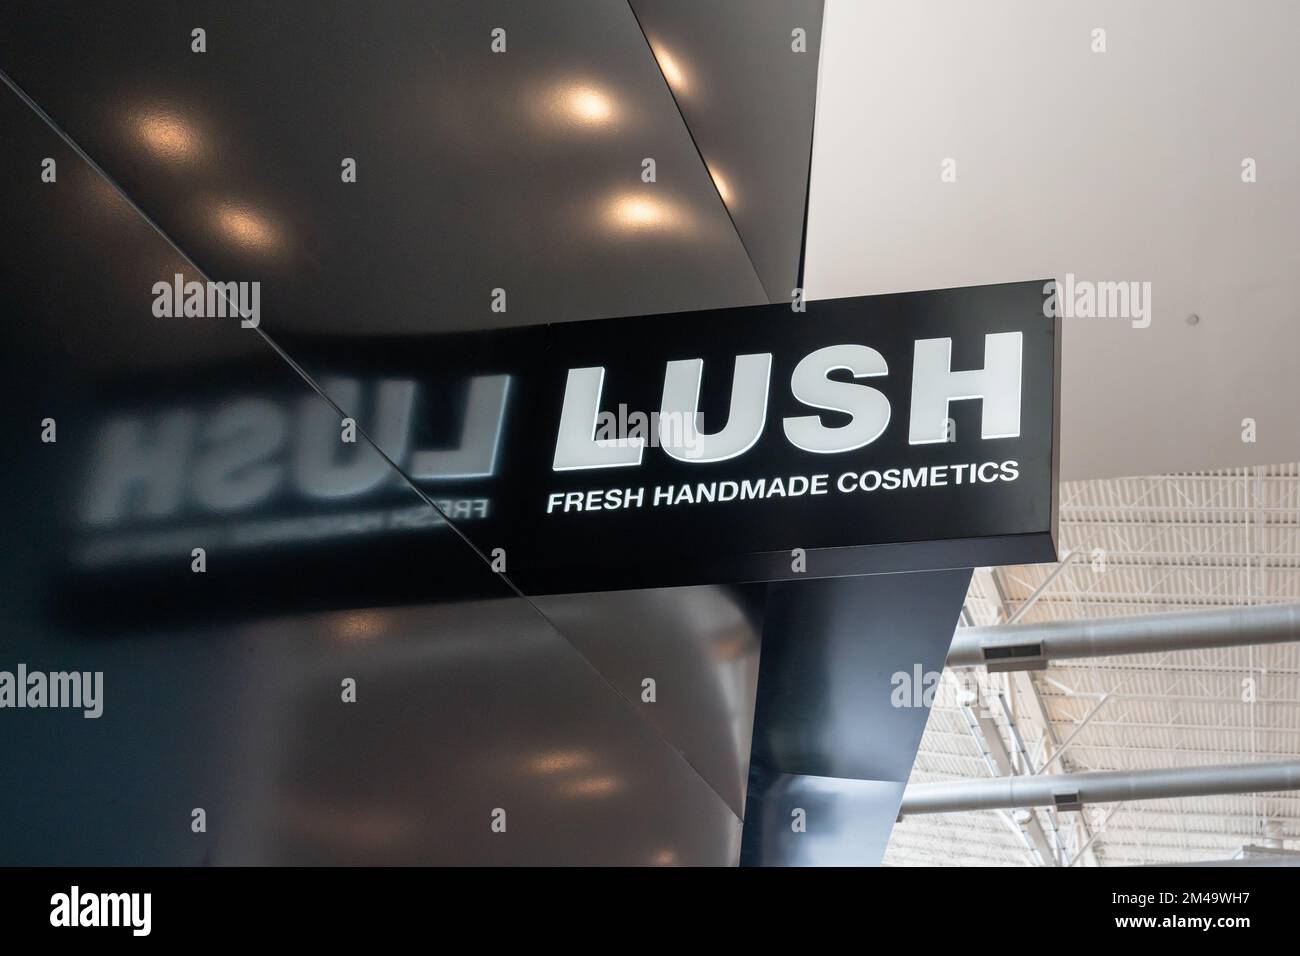 lush logo - Google Search  Lush cosmetics, Handmade cosmetics, Lush  products